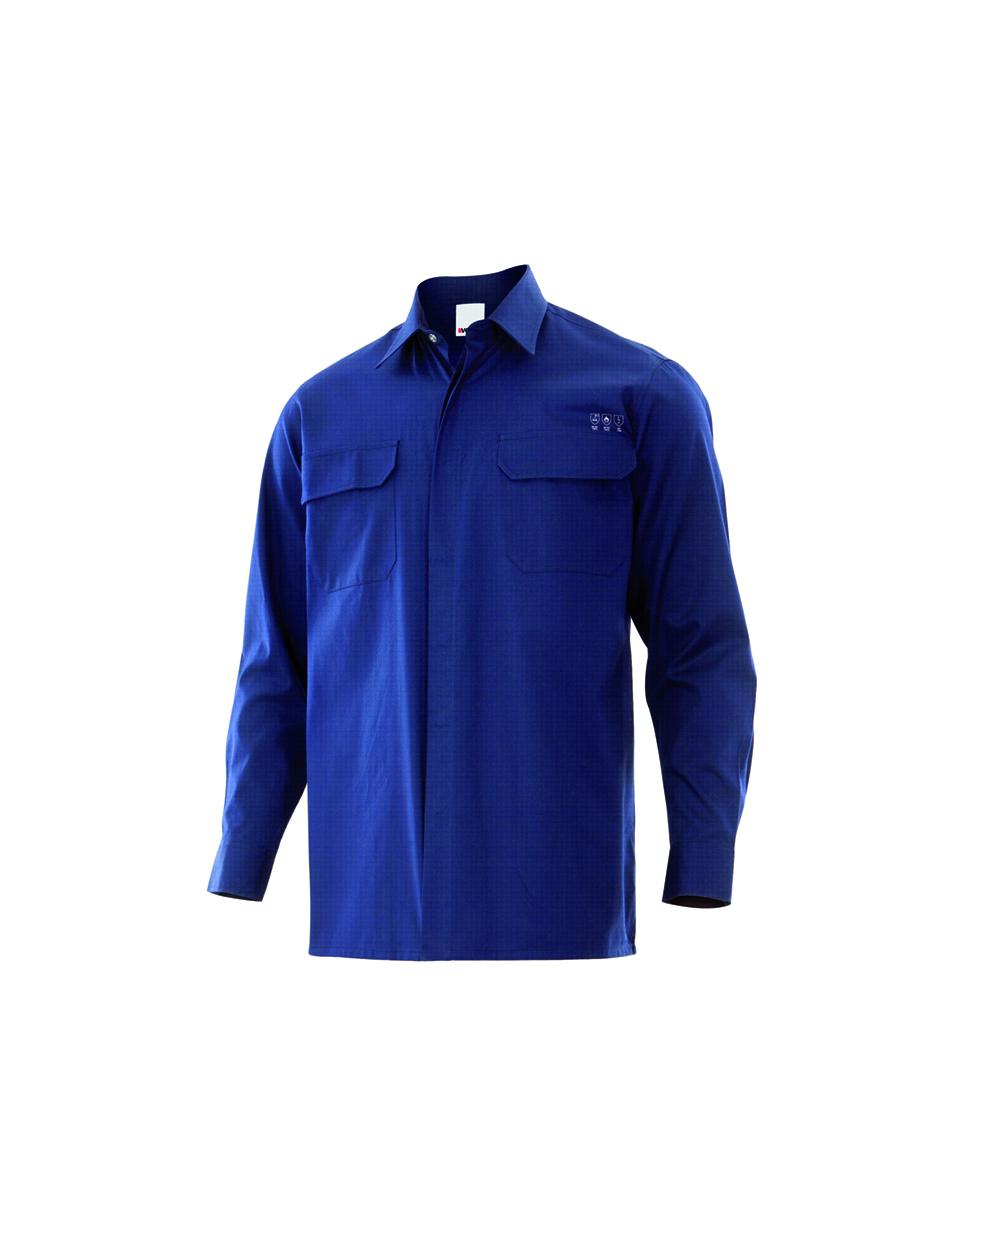 Comprar Camisa ignifuga antiestatica serie 605003 online barato Azul Navy